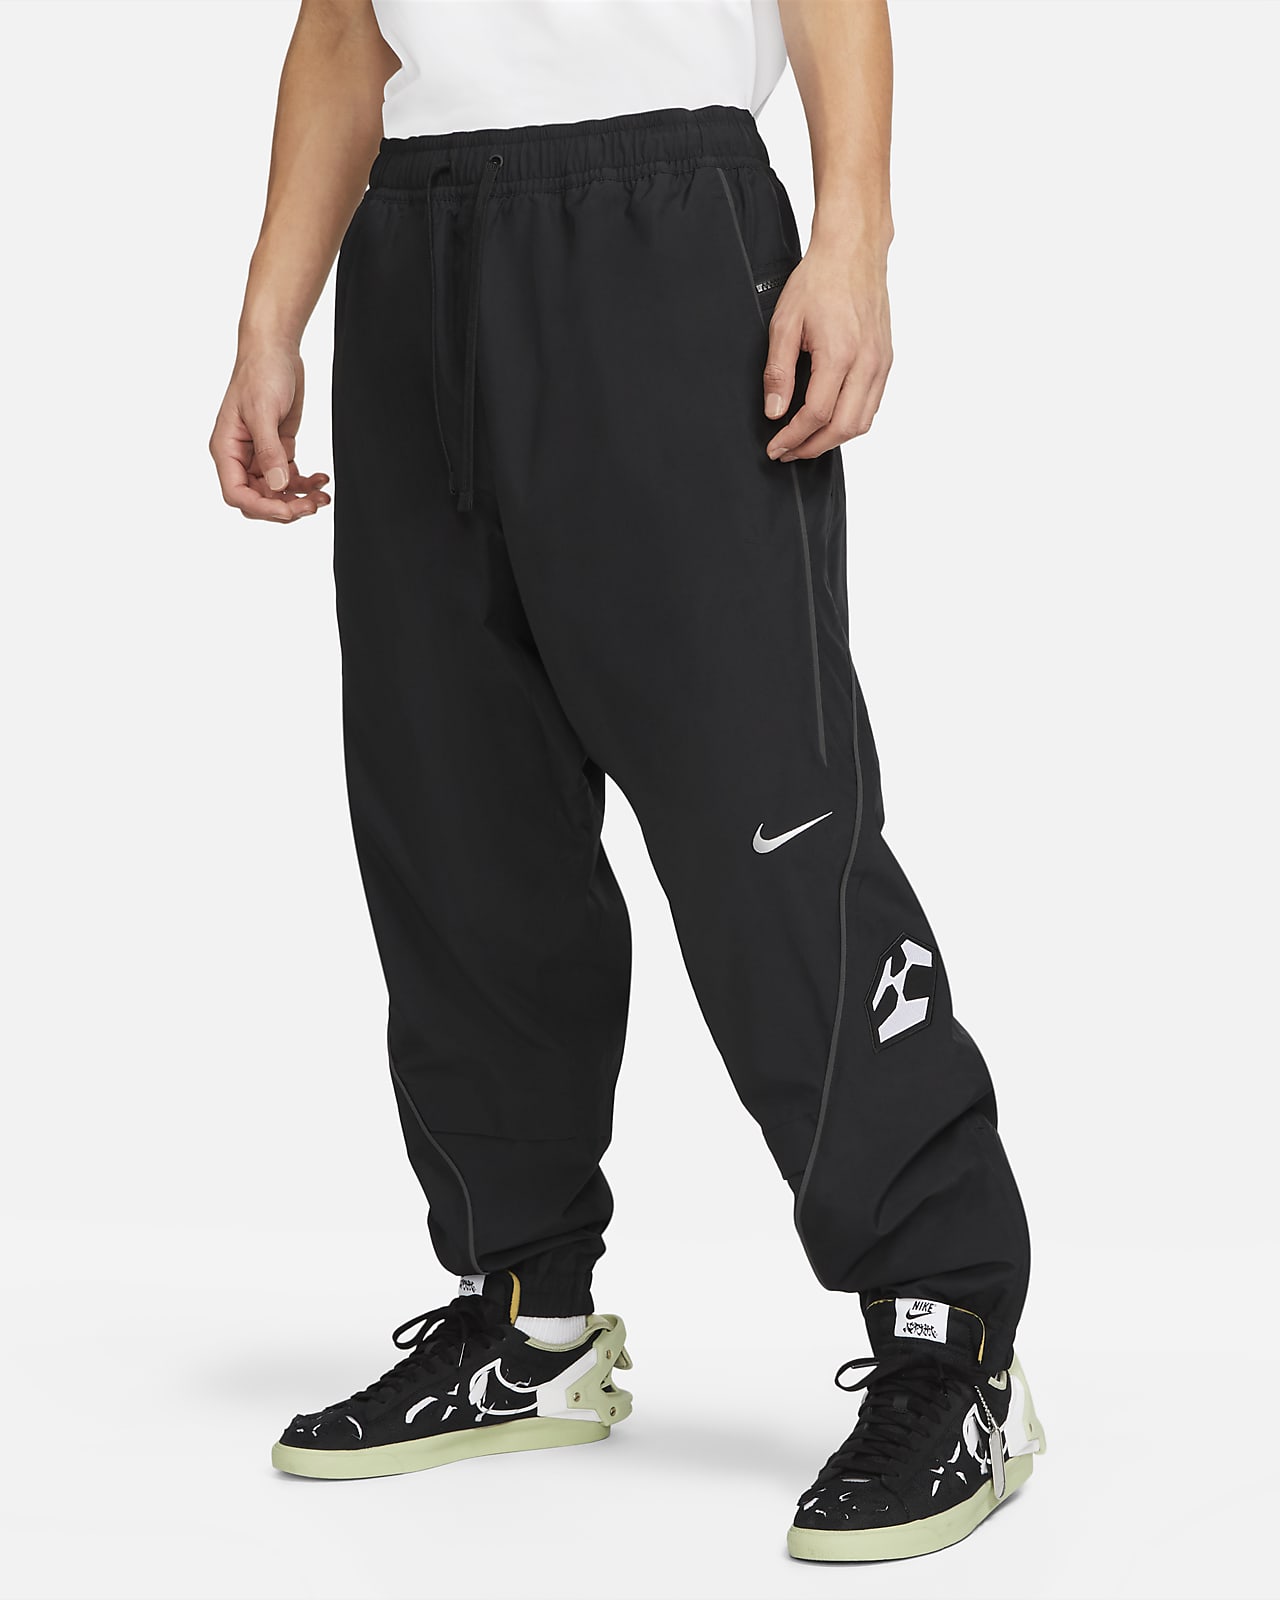 Parachute Pants Nike -  Denmark